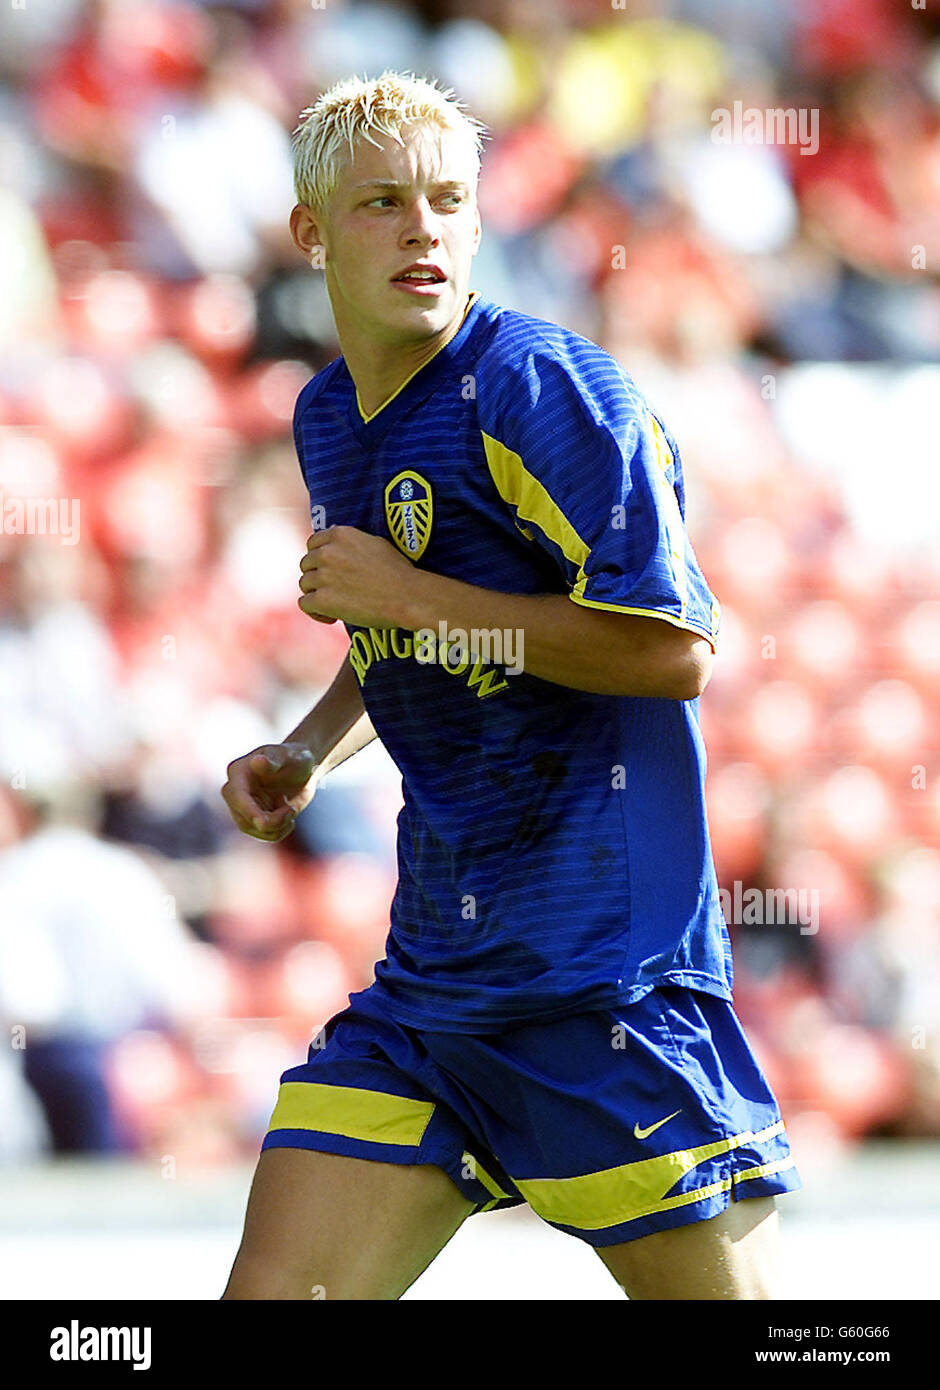 Alan Smith - Leeds Utd. Alan Smith de Leeds Utd en acción durante la Pre-Temporada Amistosa contra Barnsley. Foto de stock